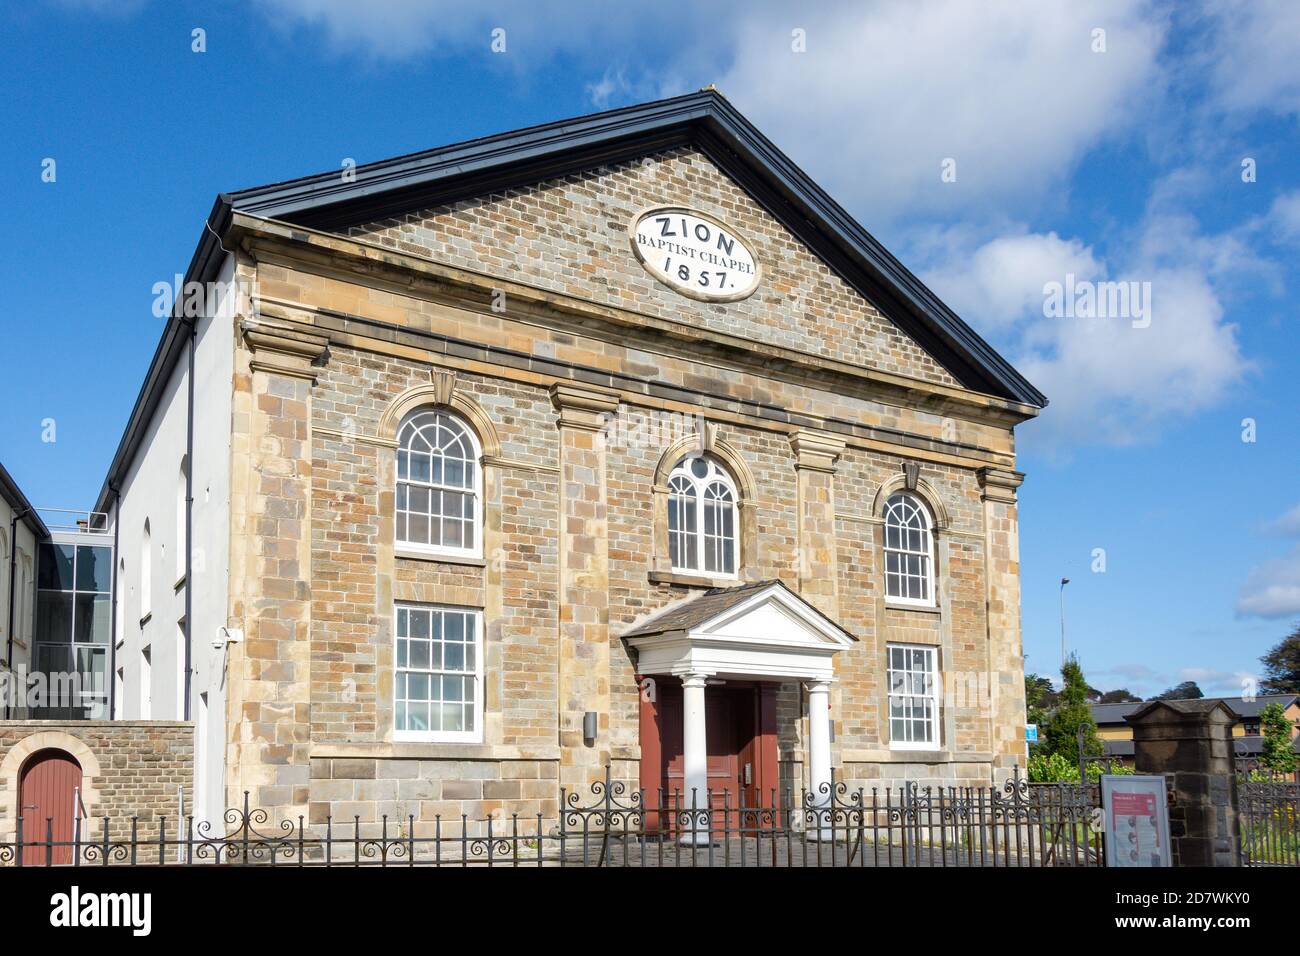 19th century Zion Baptist Chapel, Island Place, Llanelli, Carmarthenshire, Wales, United Kingdom Stock Photo